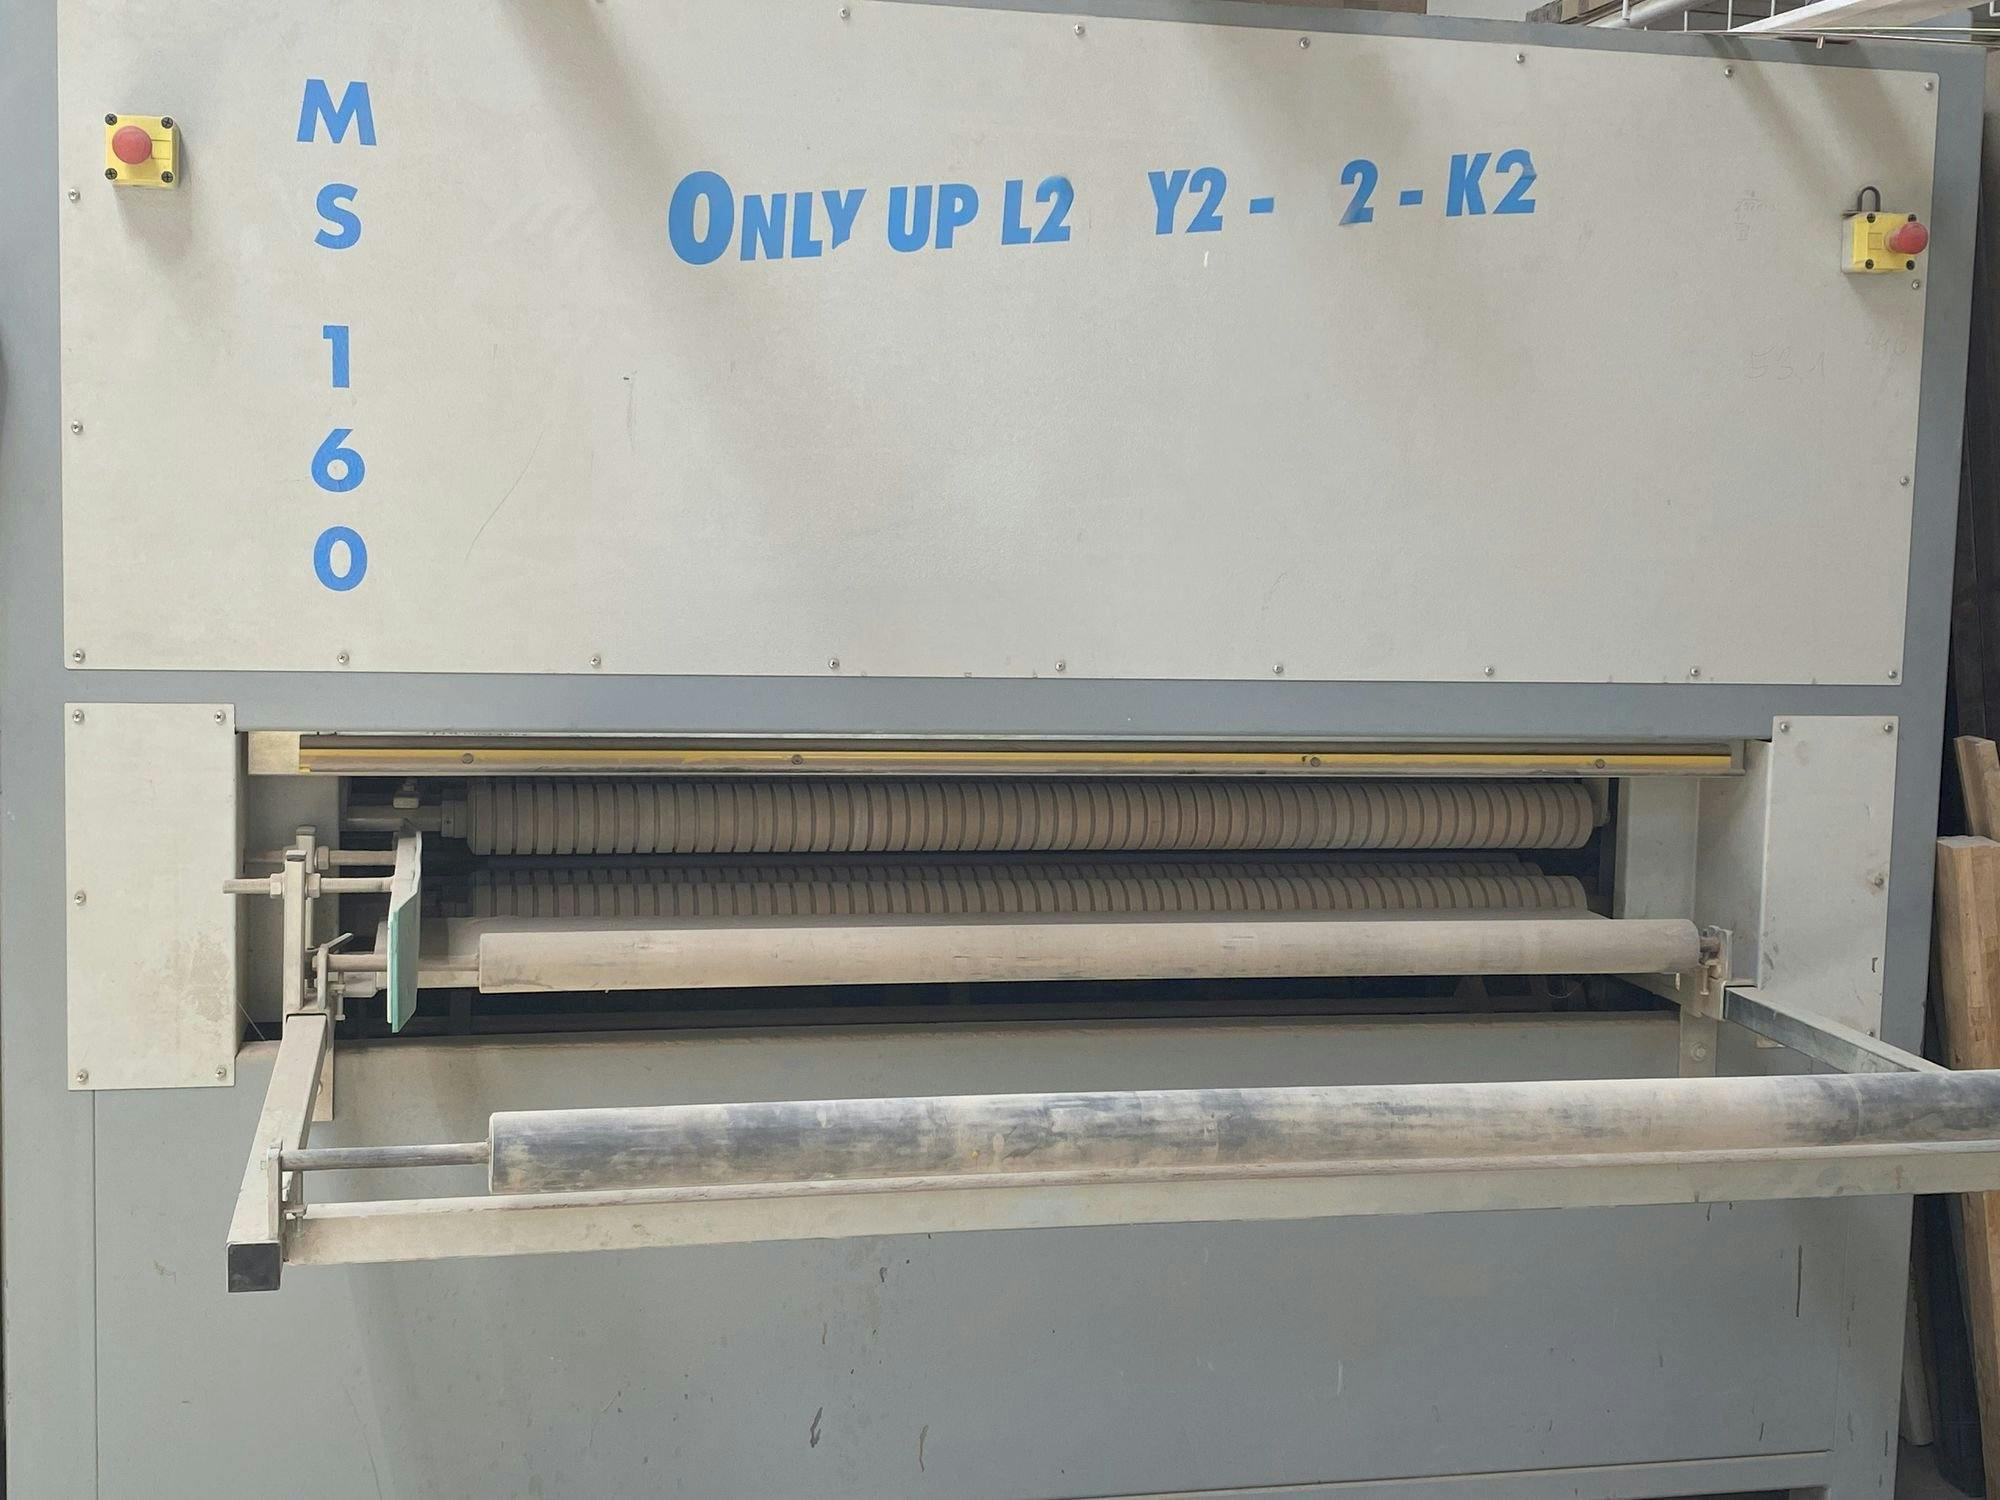 Vista frontal de la máquina MS 160 ONLY UP L2-Y1-X1-K2